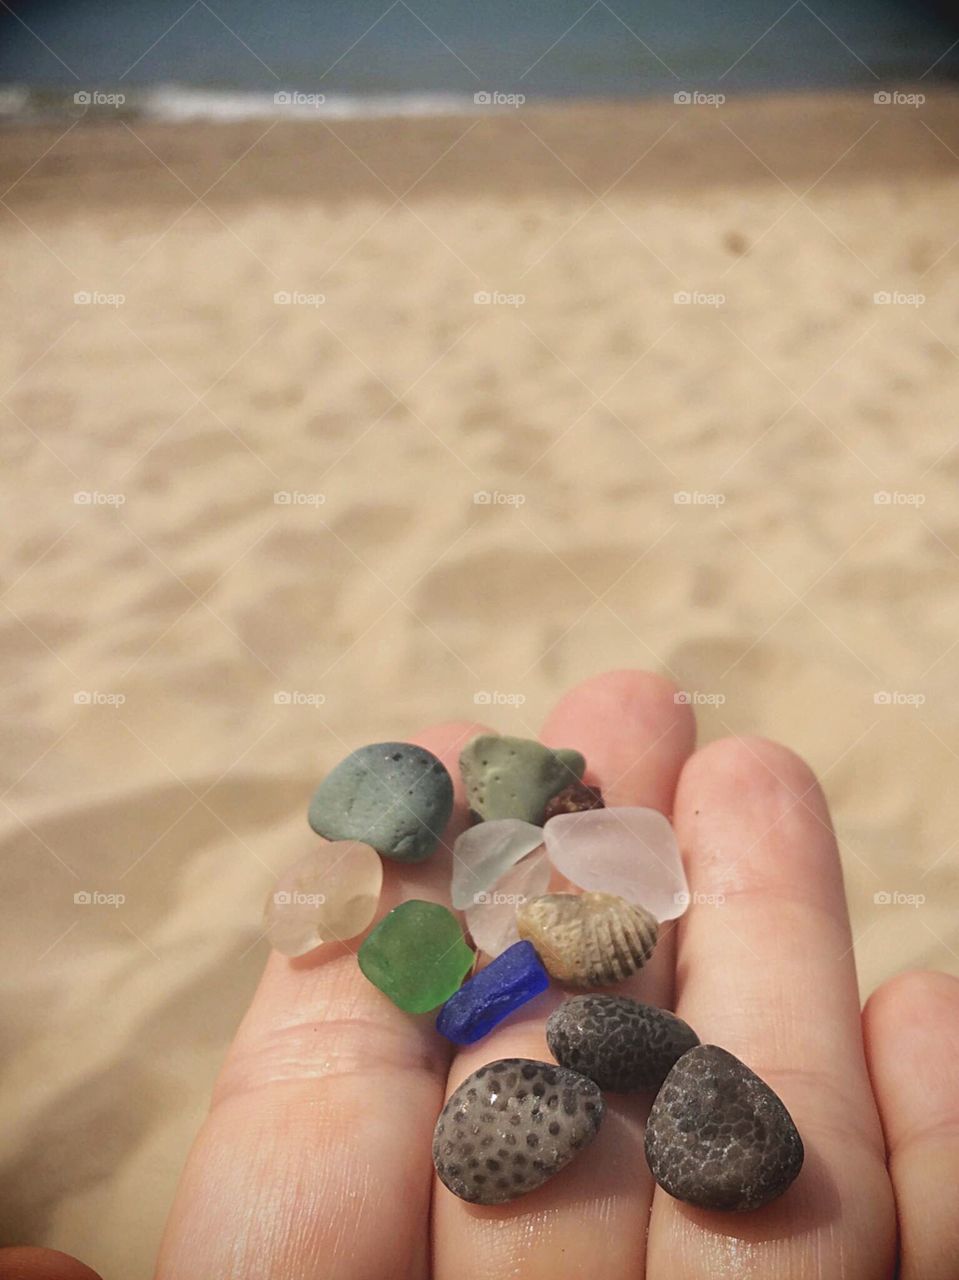 Sea glass and Petoskey stones 